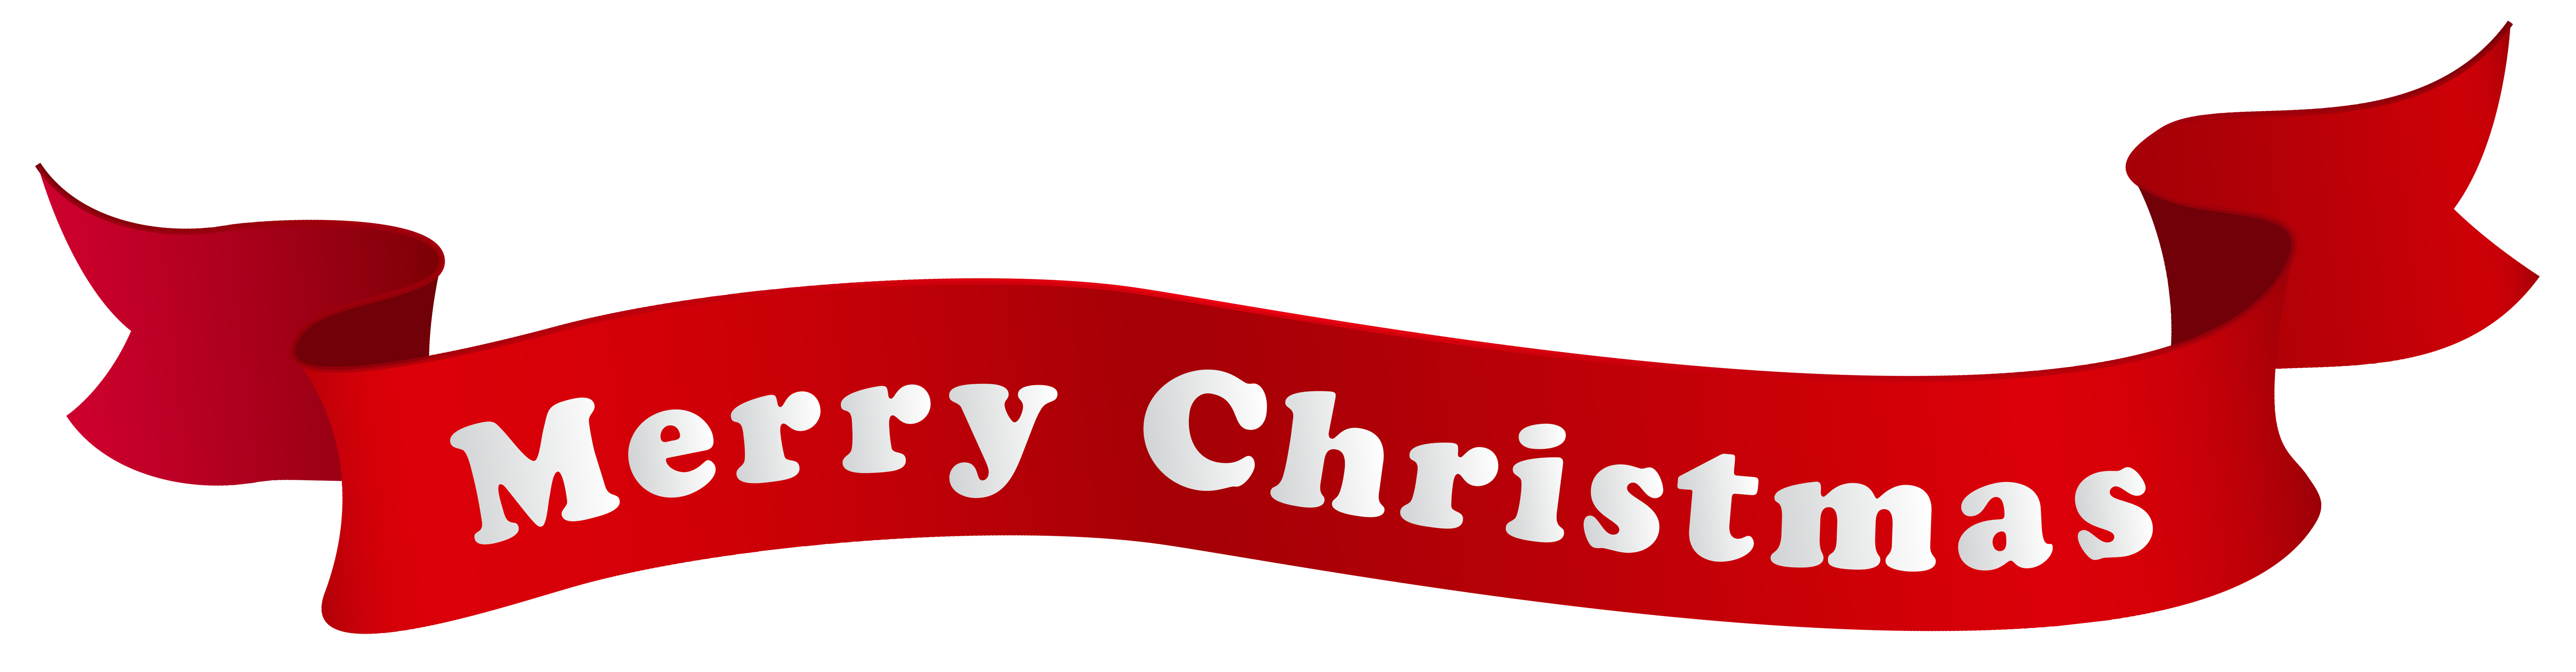 Merry christmas banners clip art